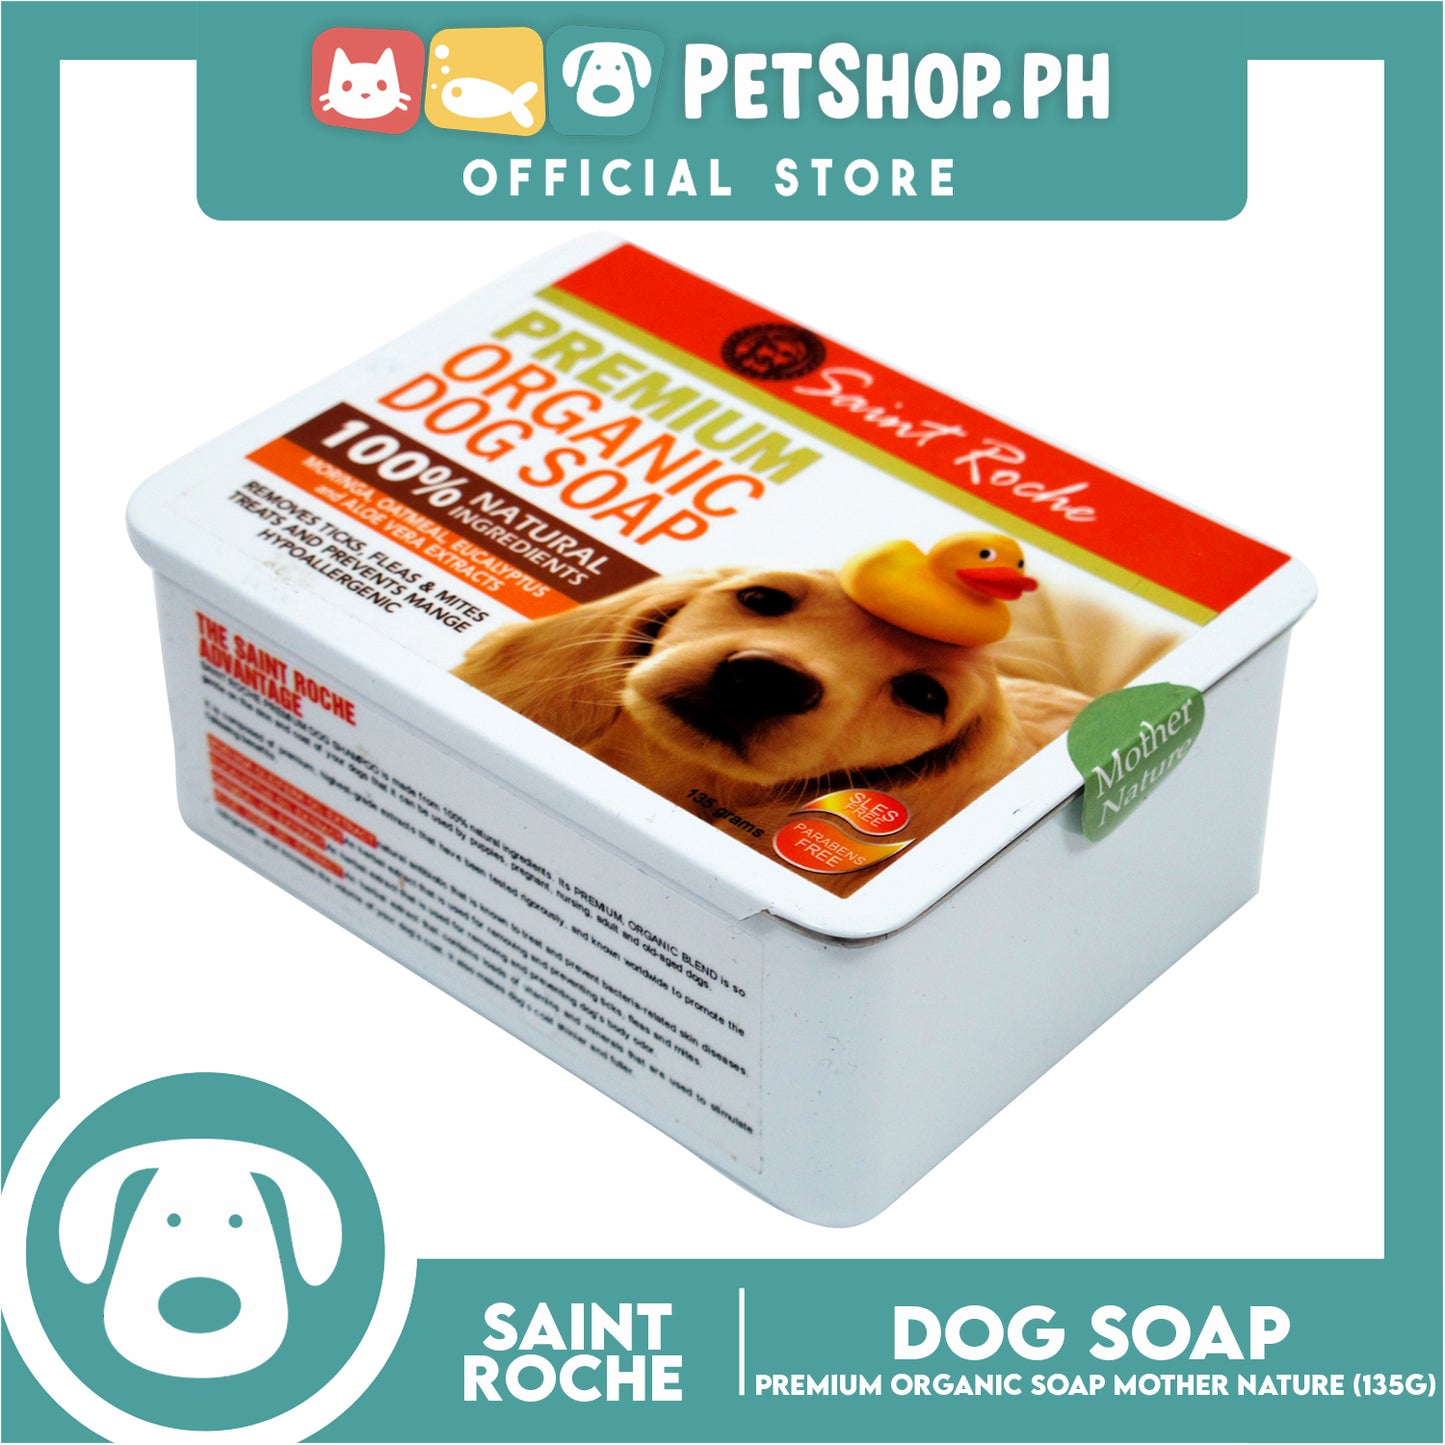 Saint Roche Premium Organic Soap (Mother Nature Scent) 135g Dog Soap